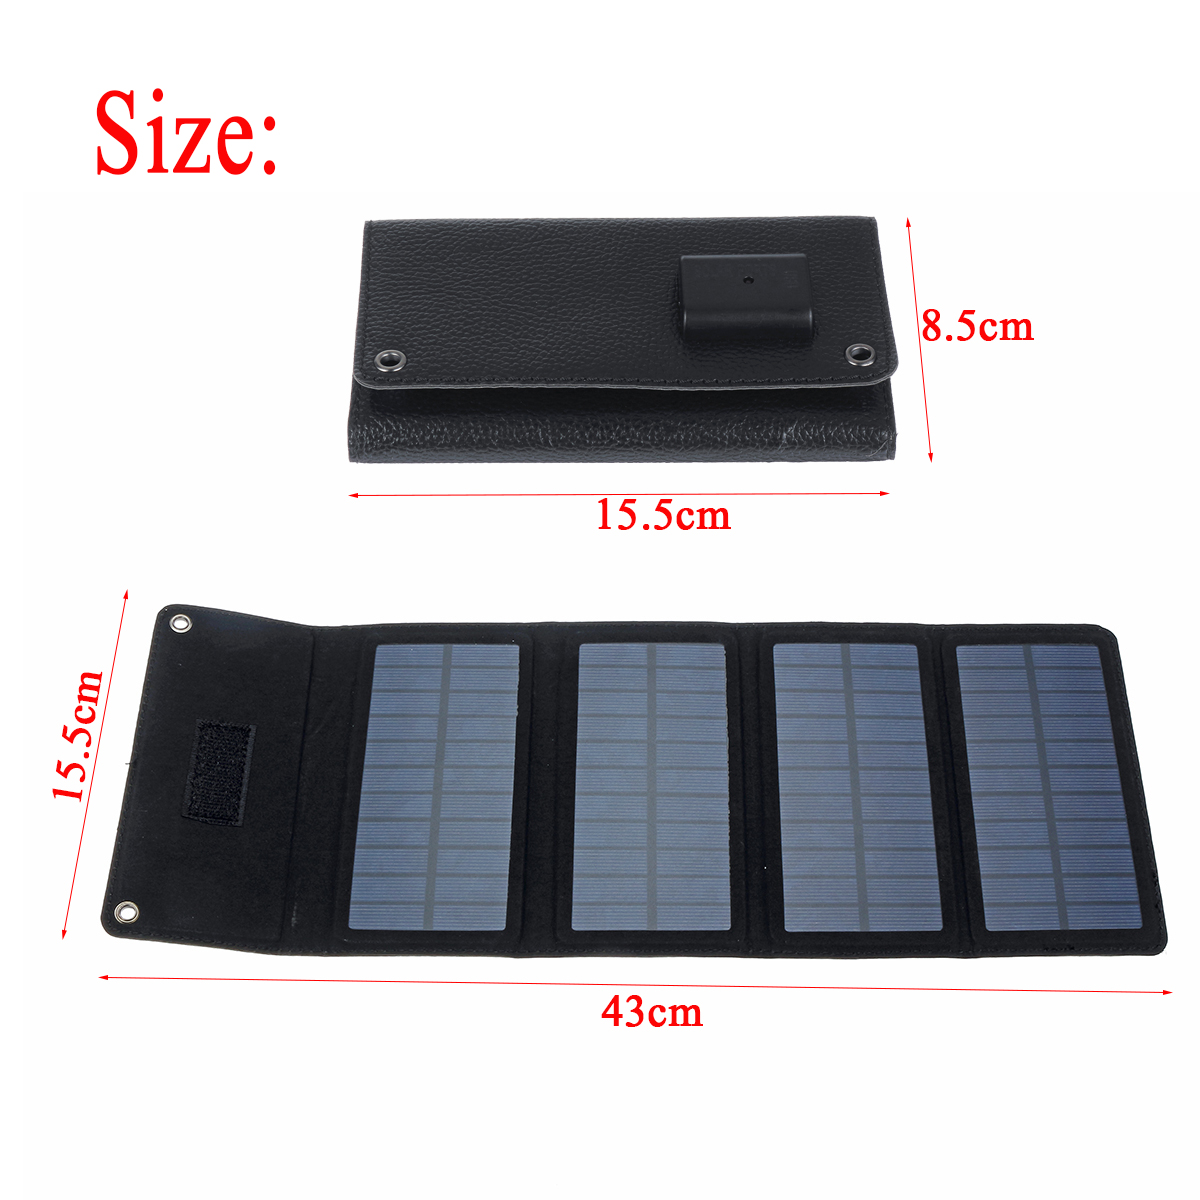 7W 5V Waterproof Foldable Mono-crystalline Silicon Solar Panel With LED Charging indicator & USB Interface 25